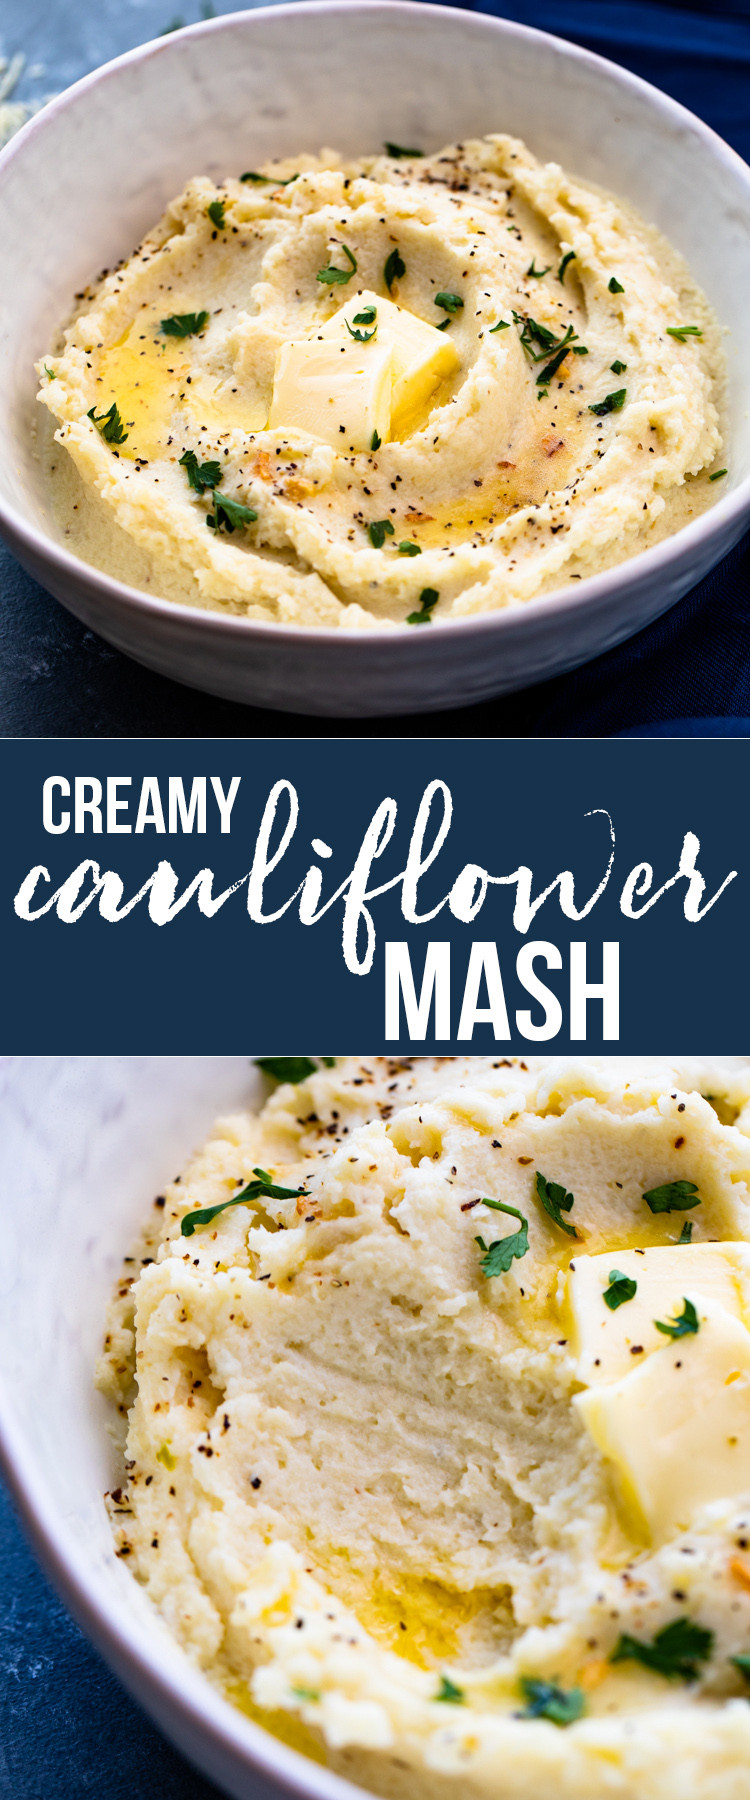 Creamy Mashed Cauliflower Keto
 The Best Creamy Mashed Cauliflower Low carb Keto